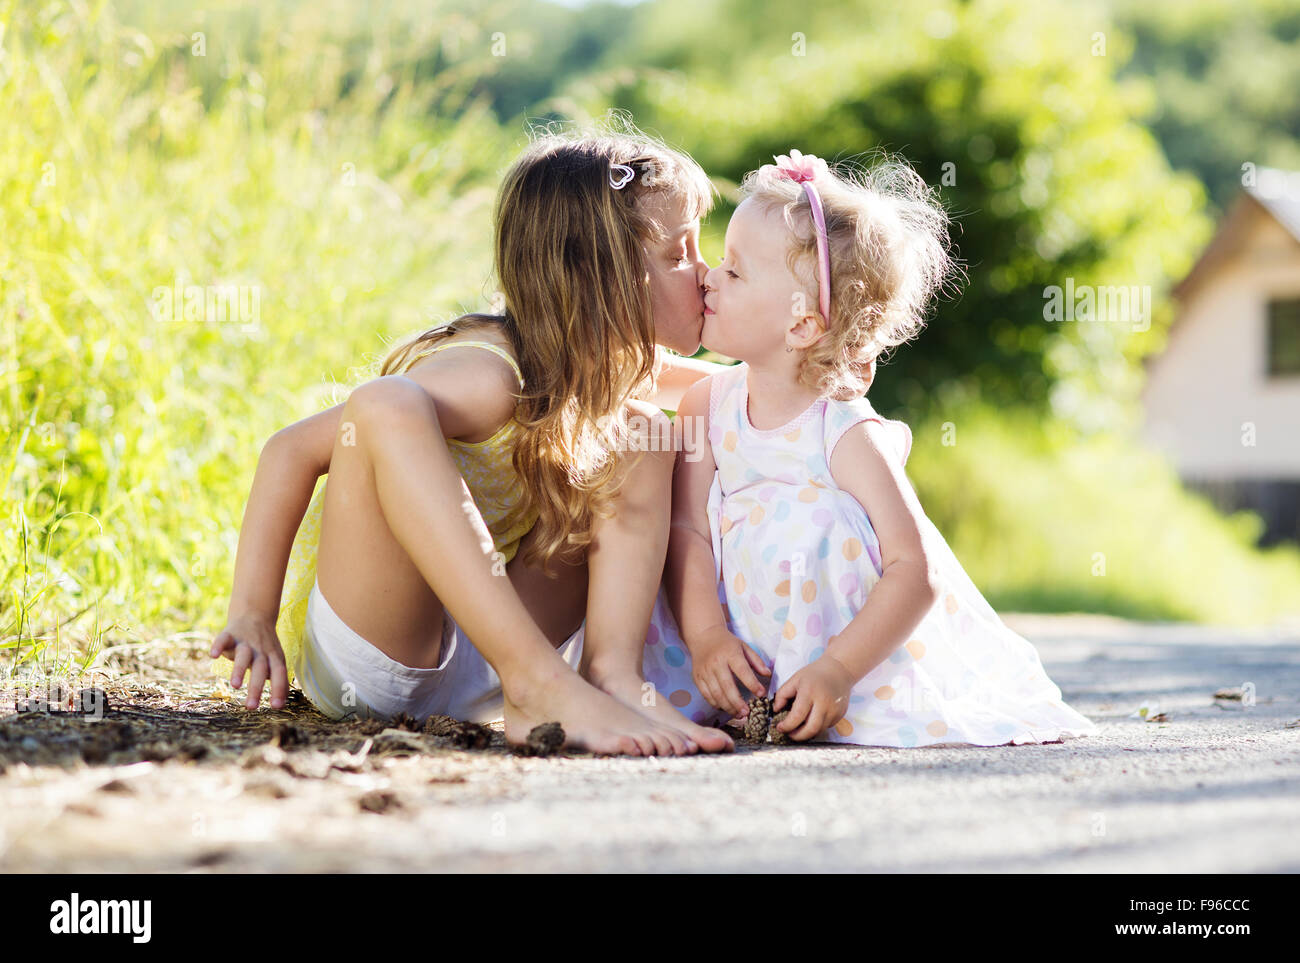 Girls Kissing Girls Pics